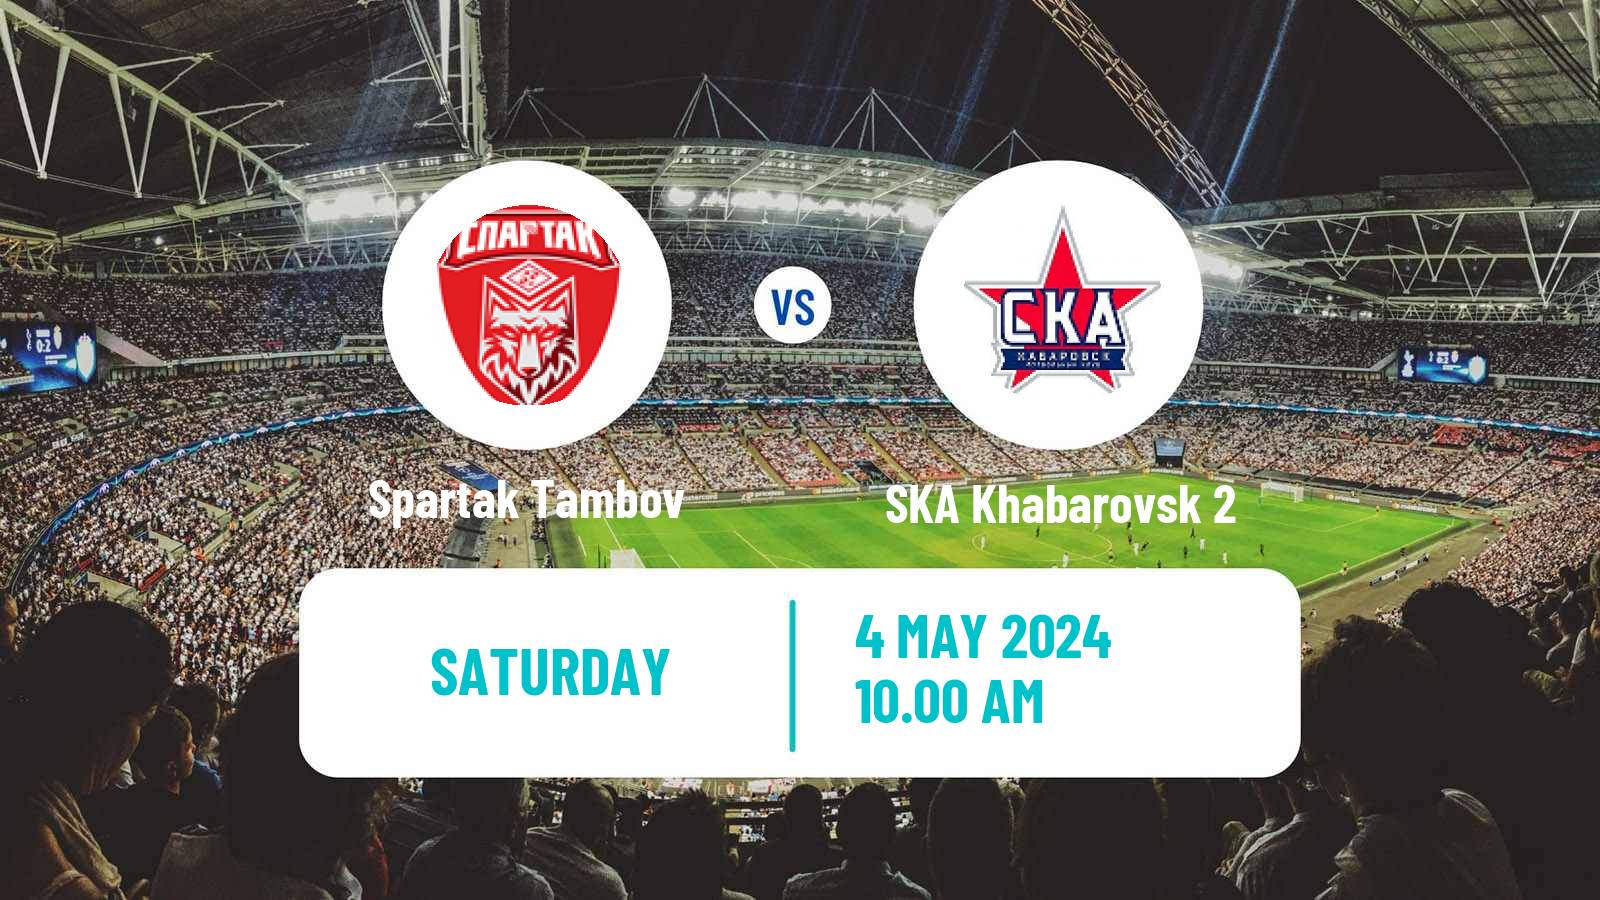 Soccer FNL 2 Division B Group 3 Spartak Tambov - SKA Khabarovsk 2